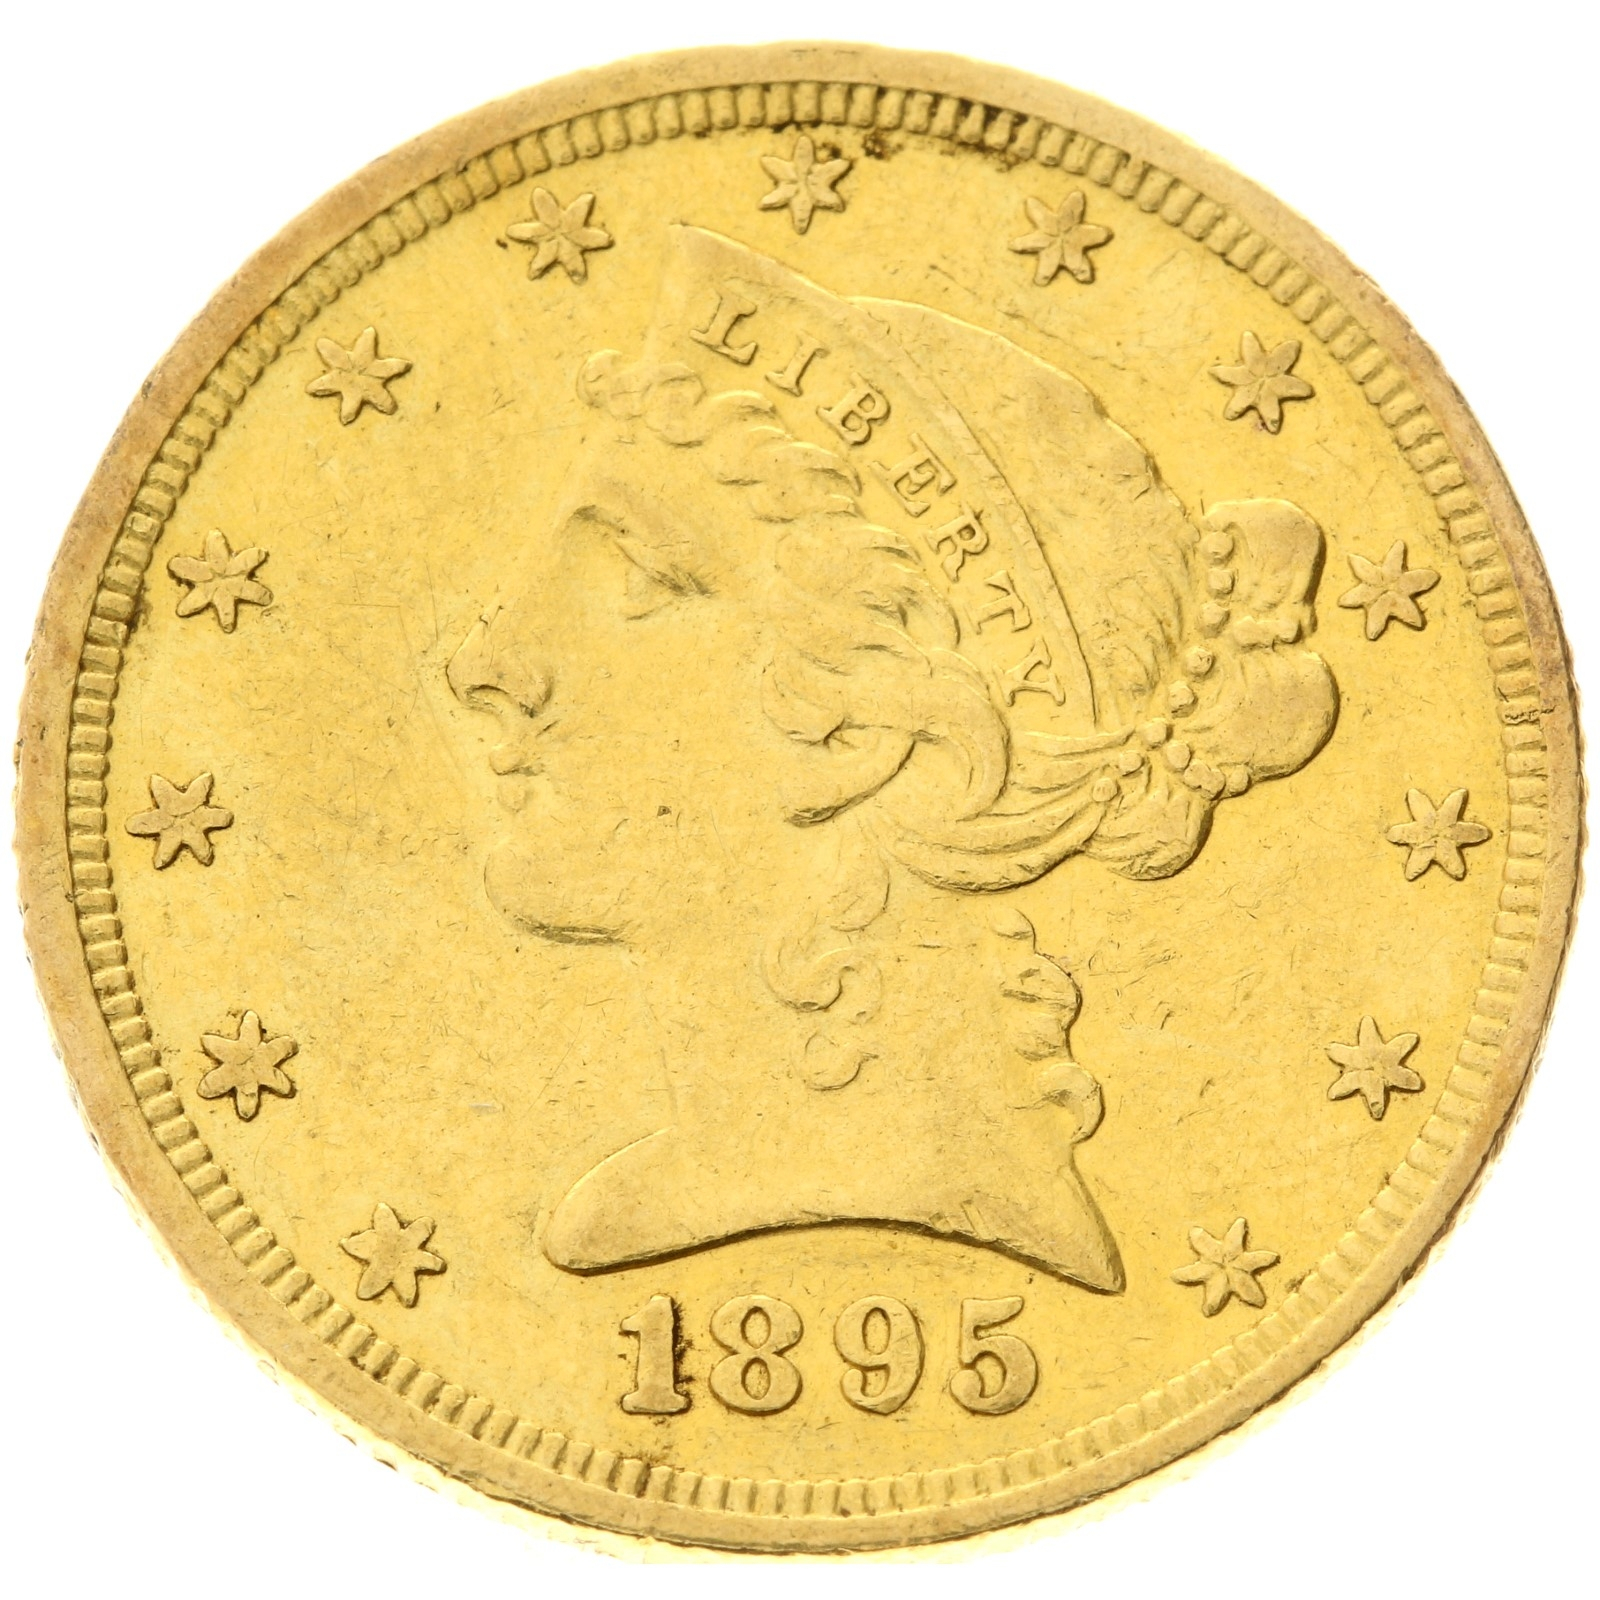 USA - 5 dollars - 1895 - Liberty / Coronet Head 